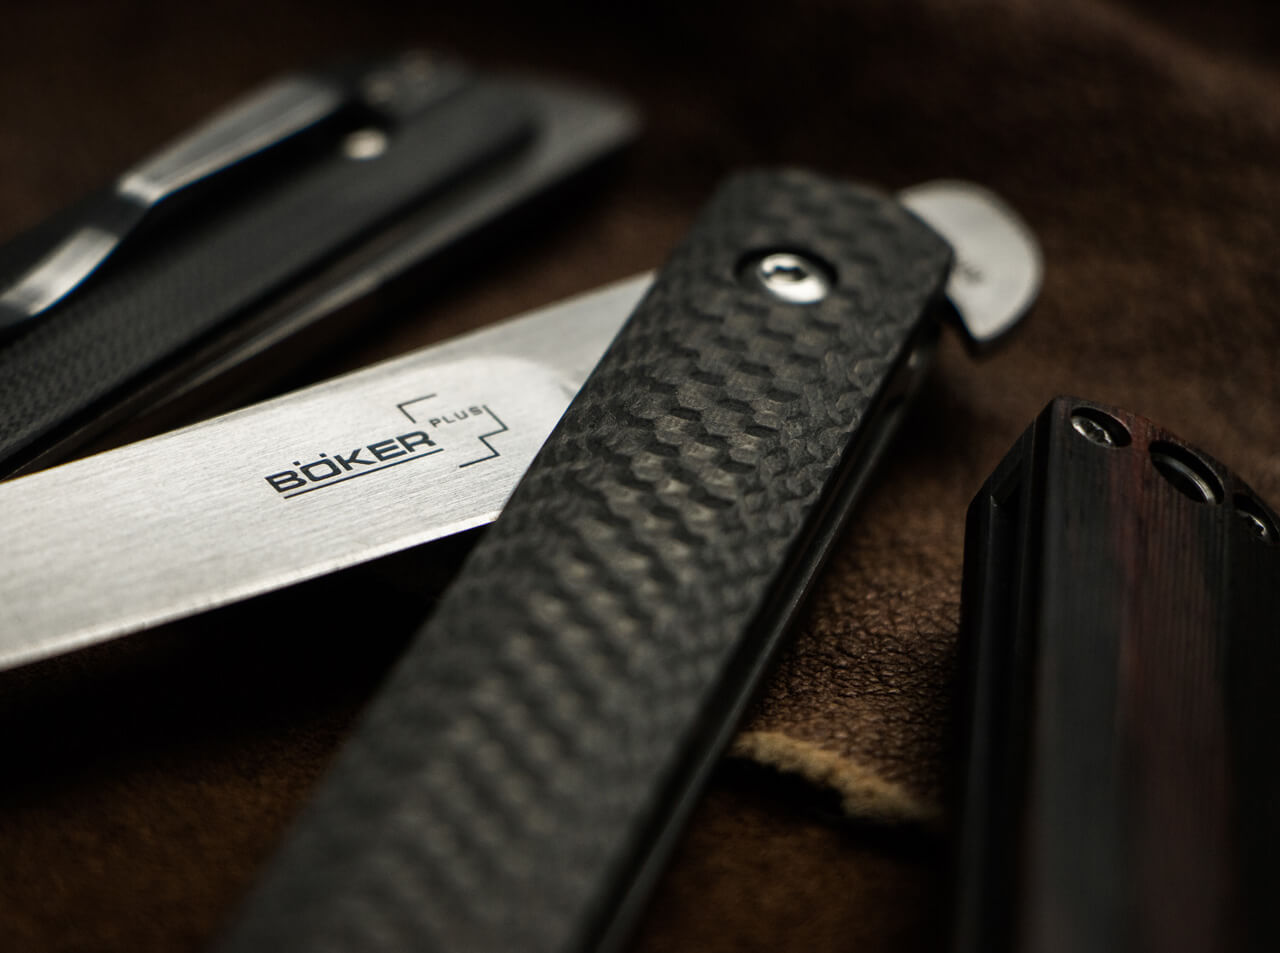 Boker Plus Wasabi Front Flipper Slipjoint - Titanium Handle Scales / 1 –  Northwest Knives